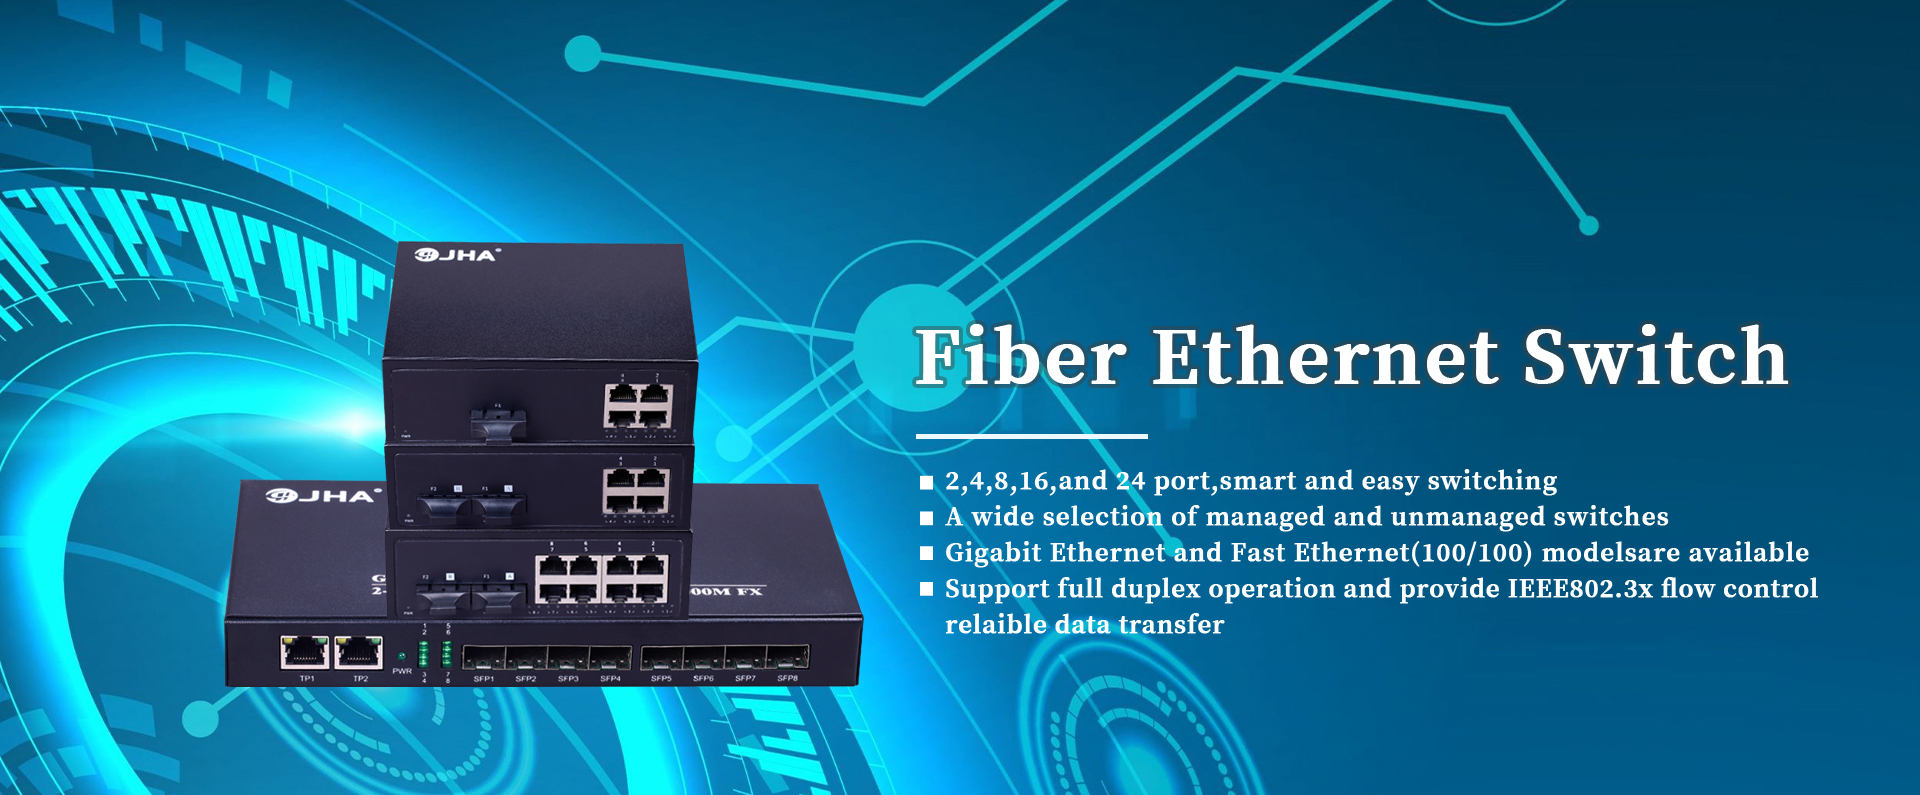 Fiber Ethernet-switch